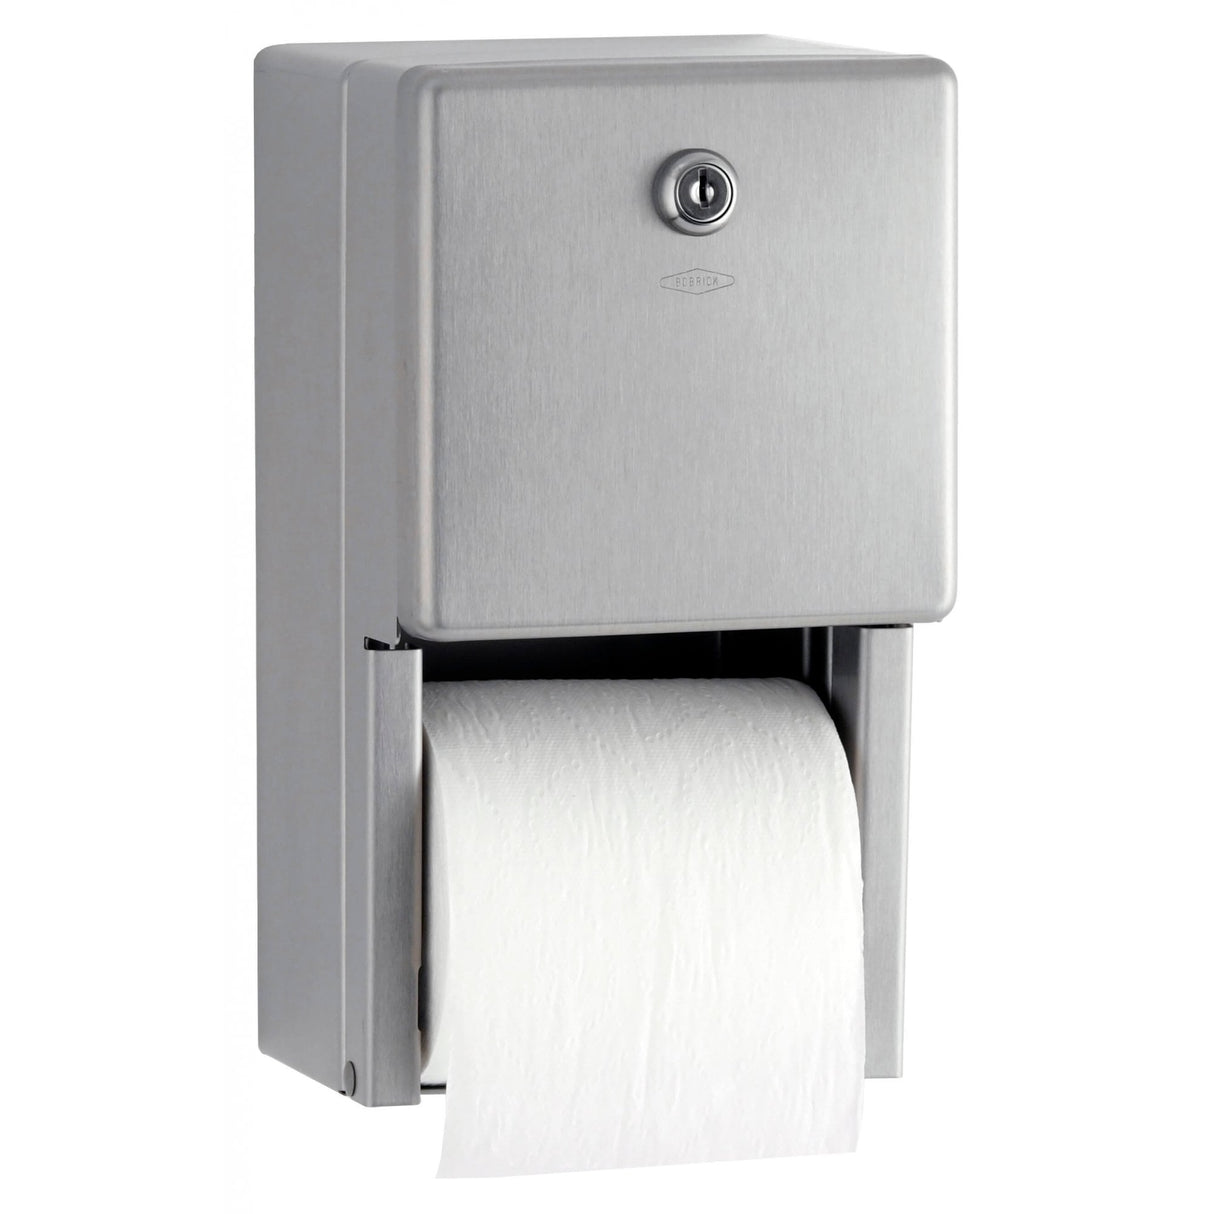 B-2888 Double Toilet Paper Dispenser